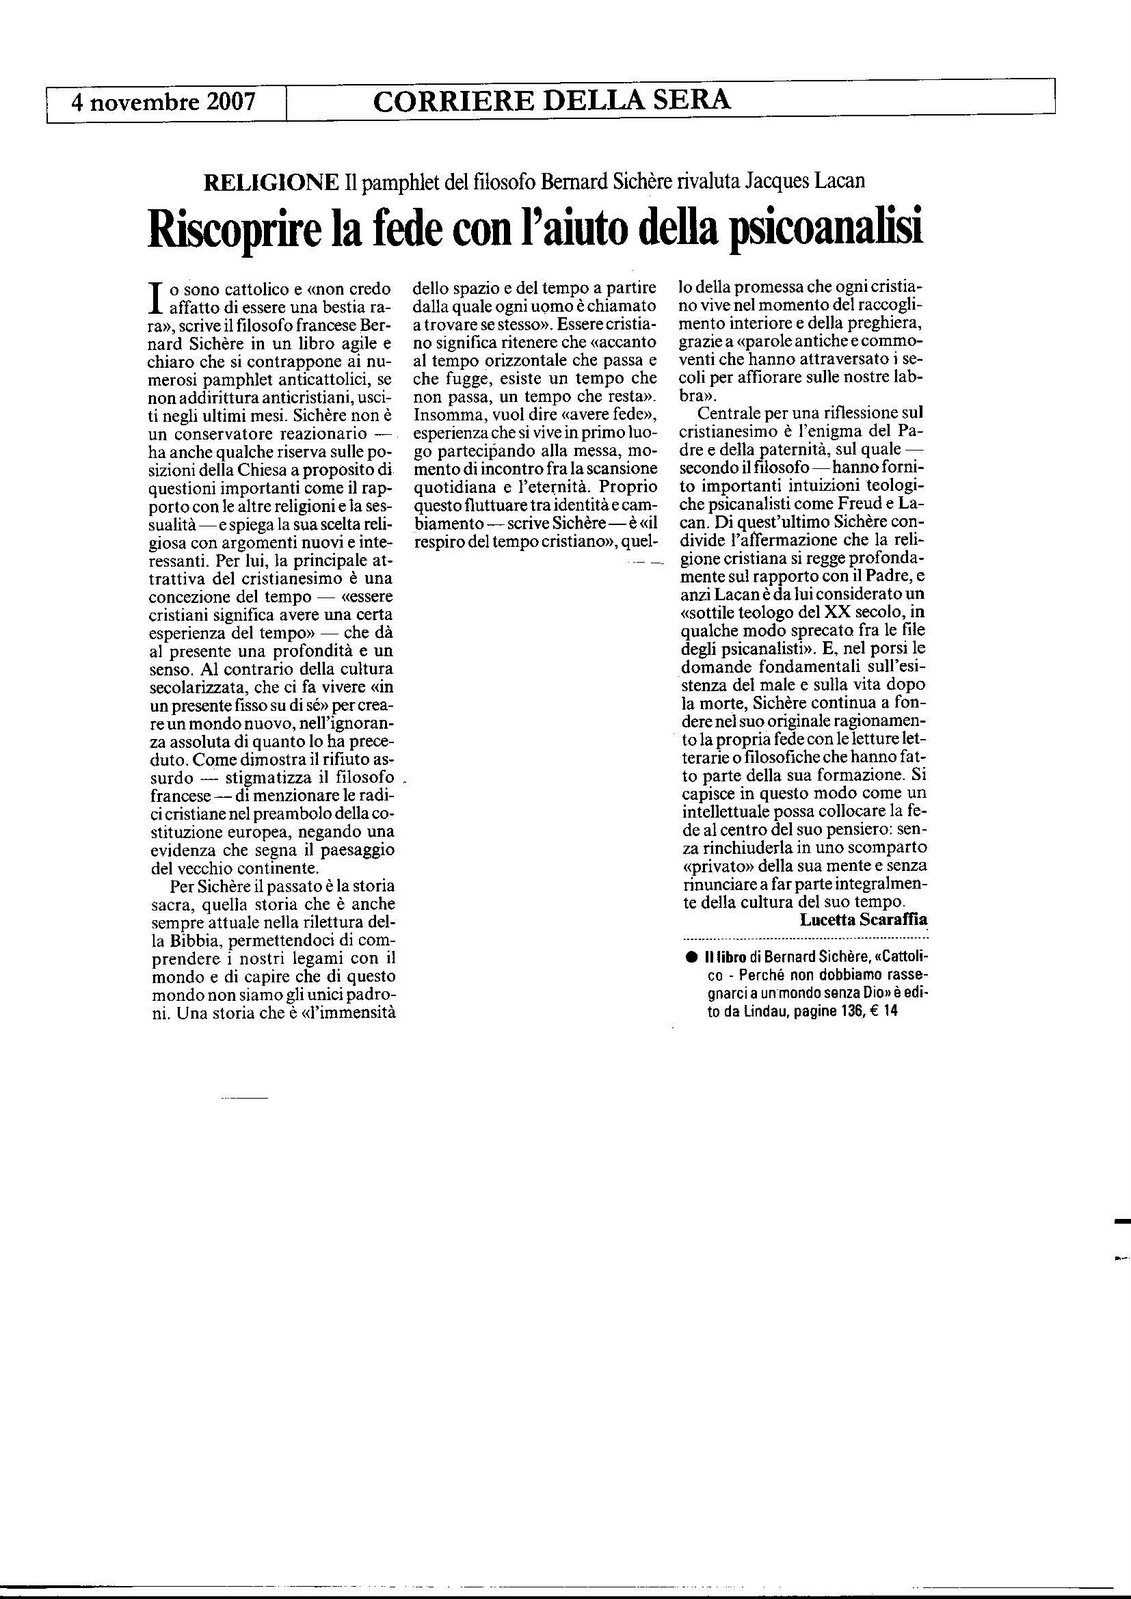 [Corriere+4.11.2007pdf.jpg]